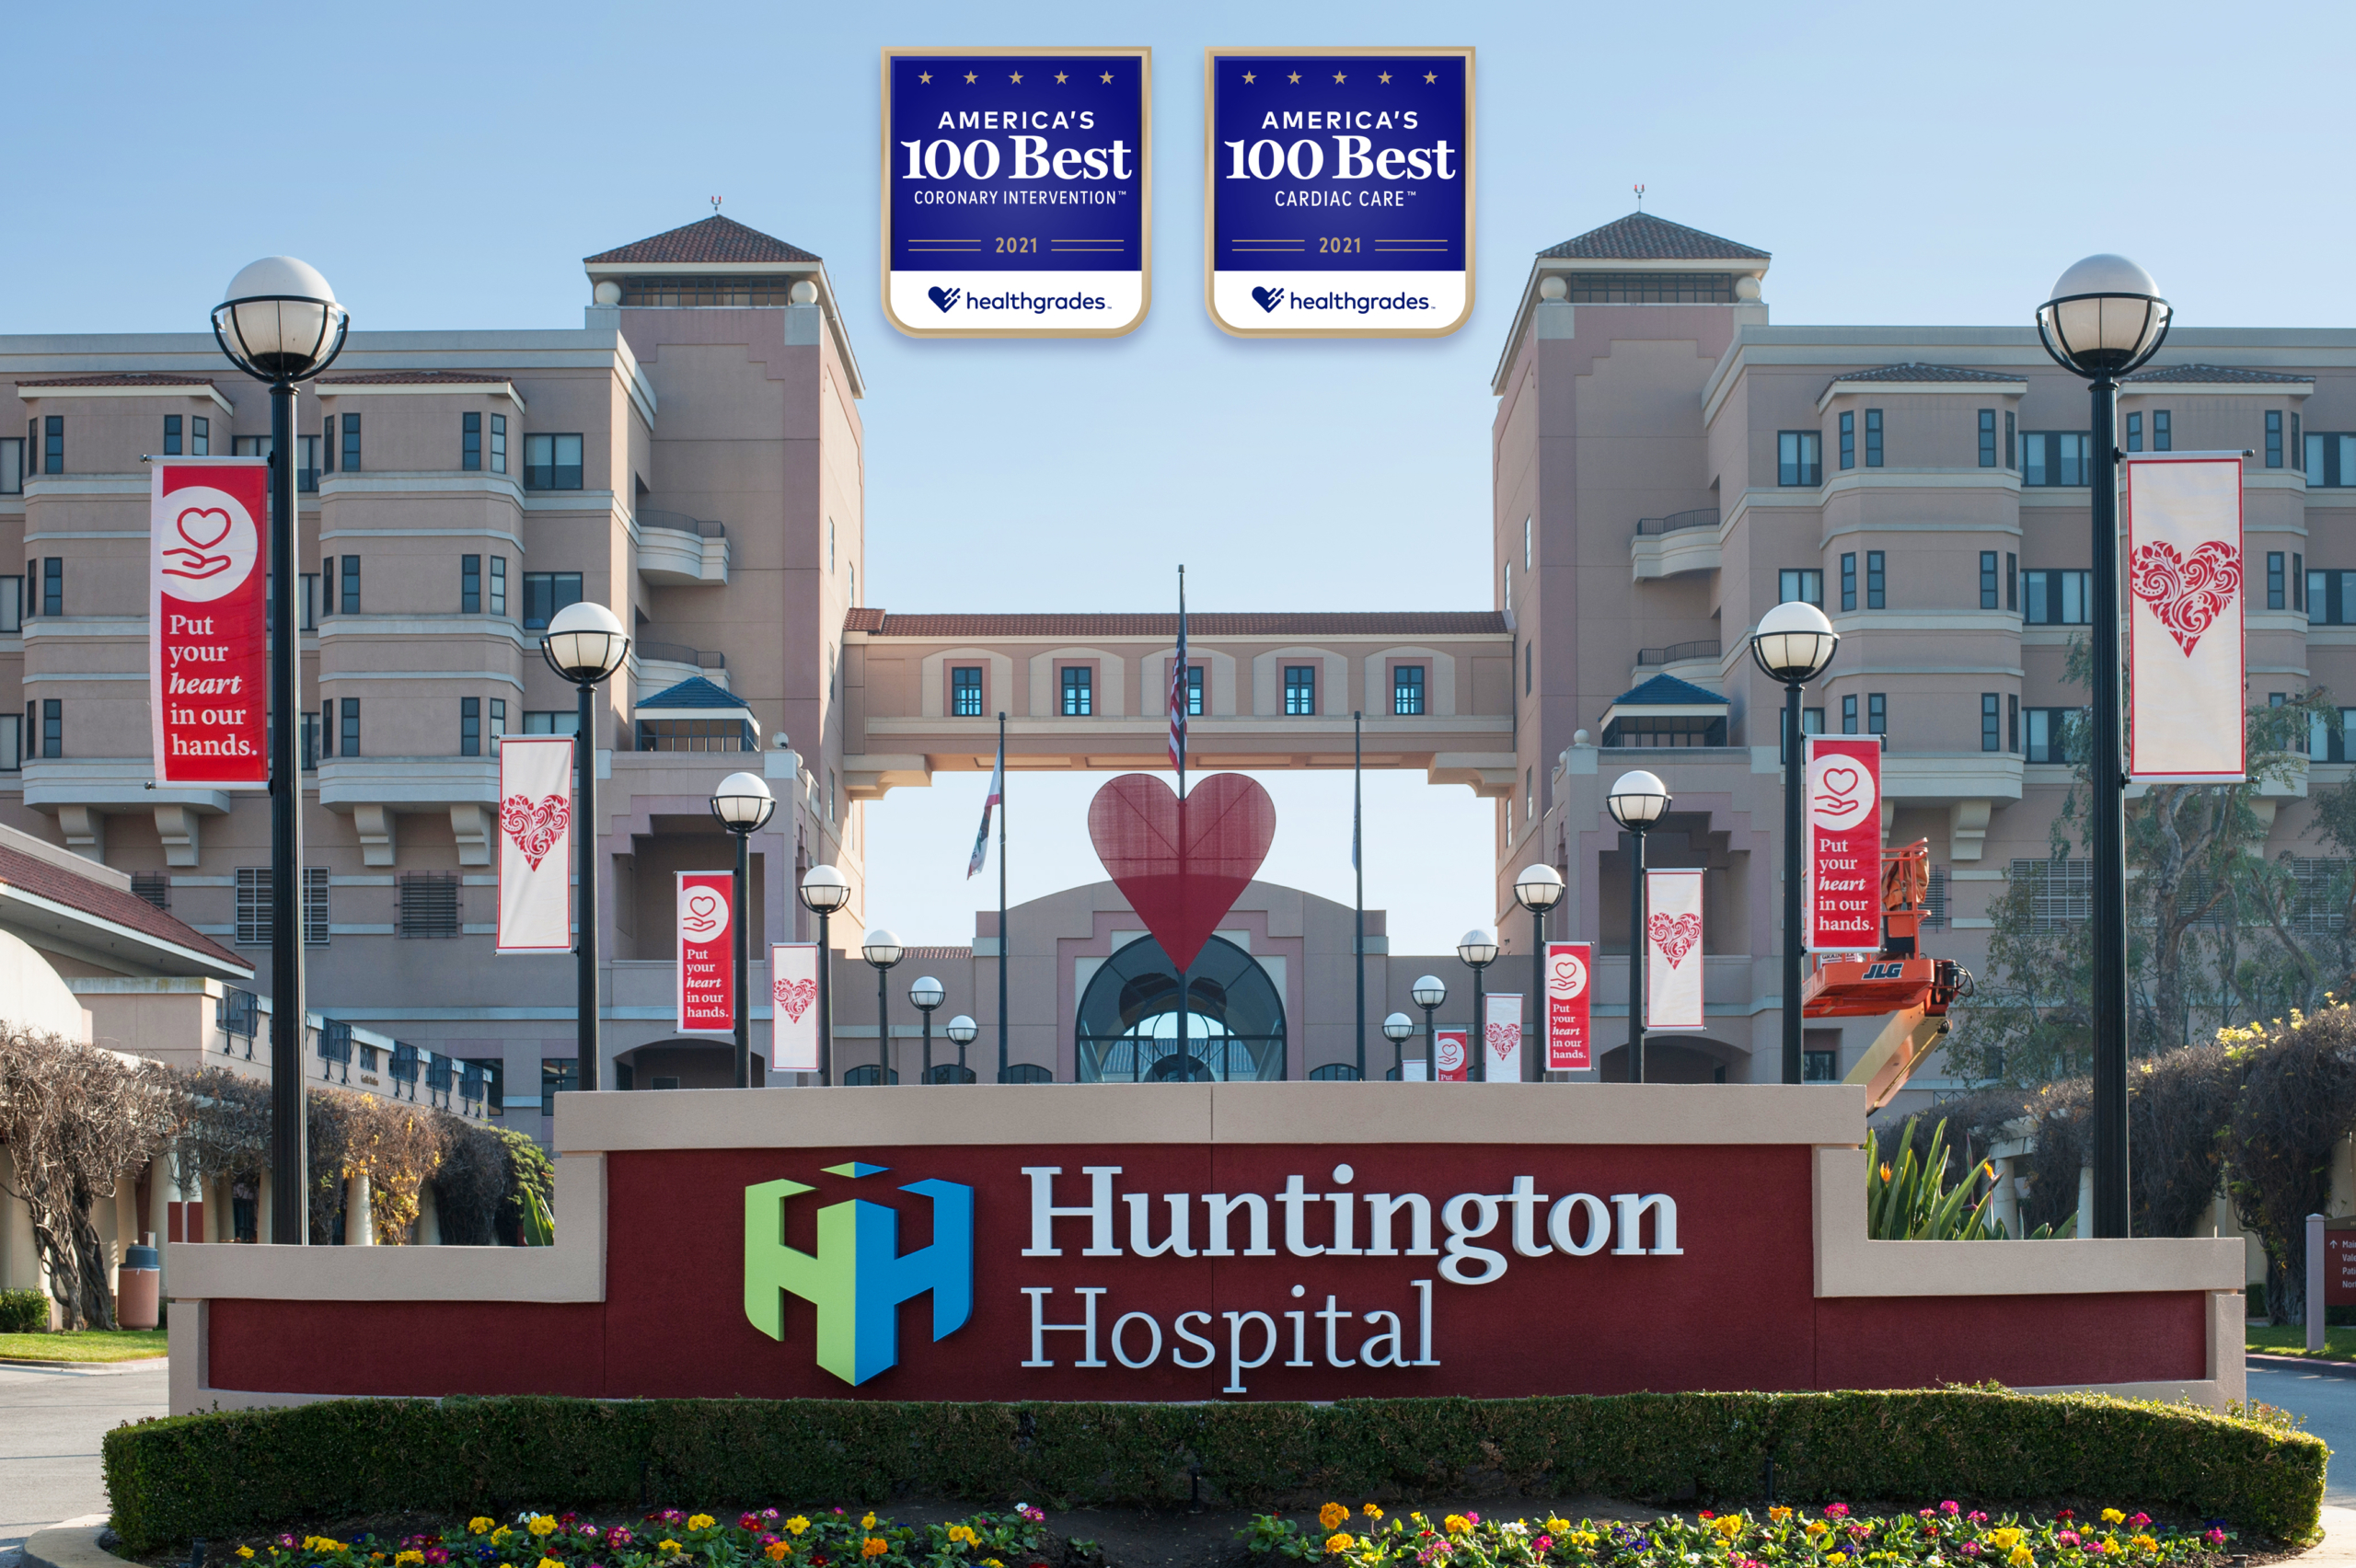 Huntington Hospital Named America’s 100 Best for Cardiac Care and Coronary Intervention by Healthgrades